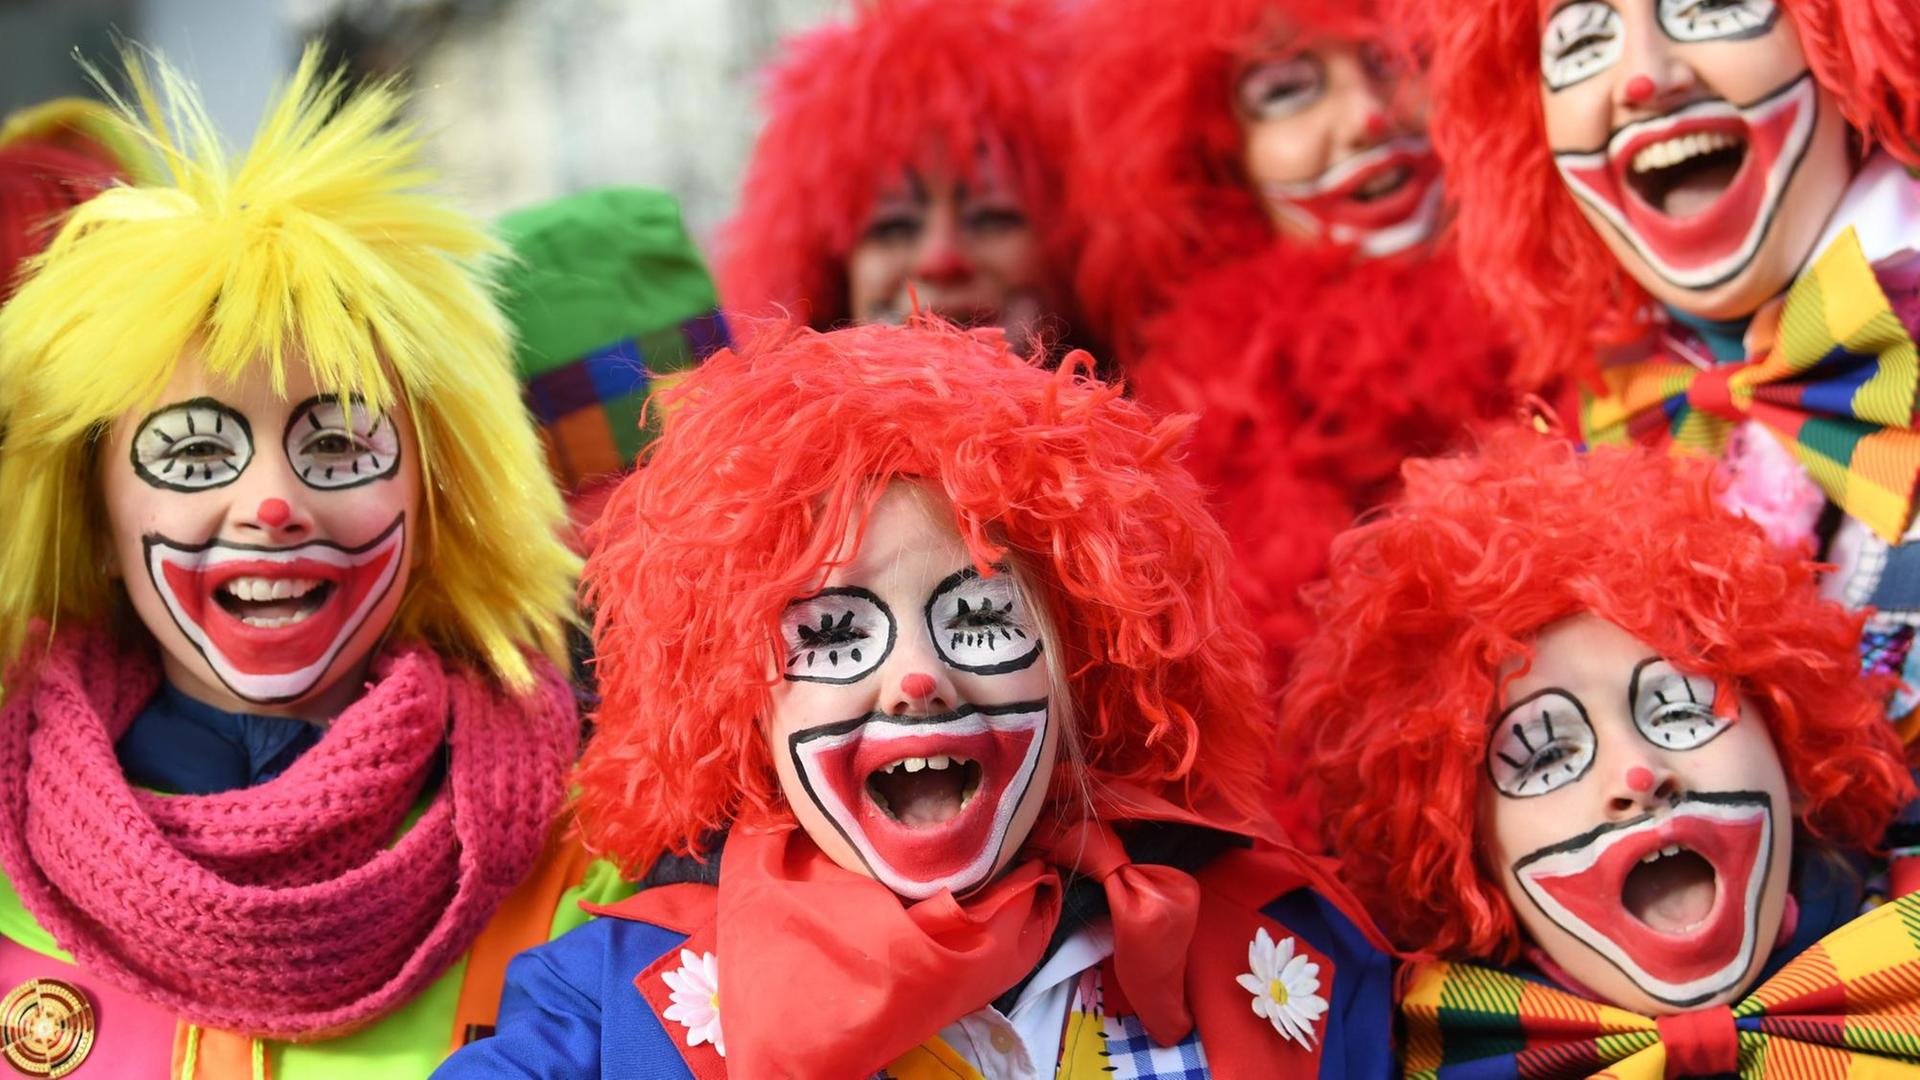 12.02.2018, Nordrhein-Westfalen, Düsseldorf: Als Clowns geschminkte Karnevalisten nehmen an dem Rosenmontagszug teil.